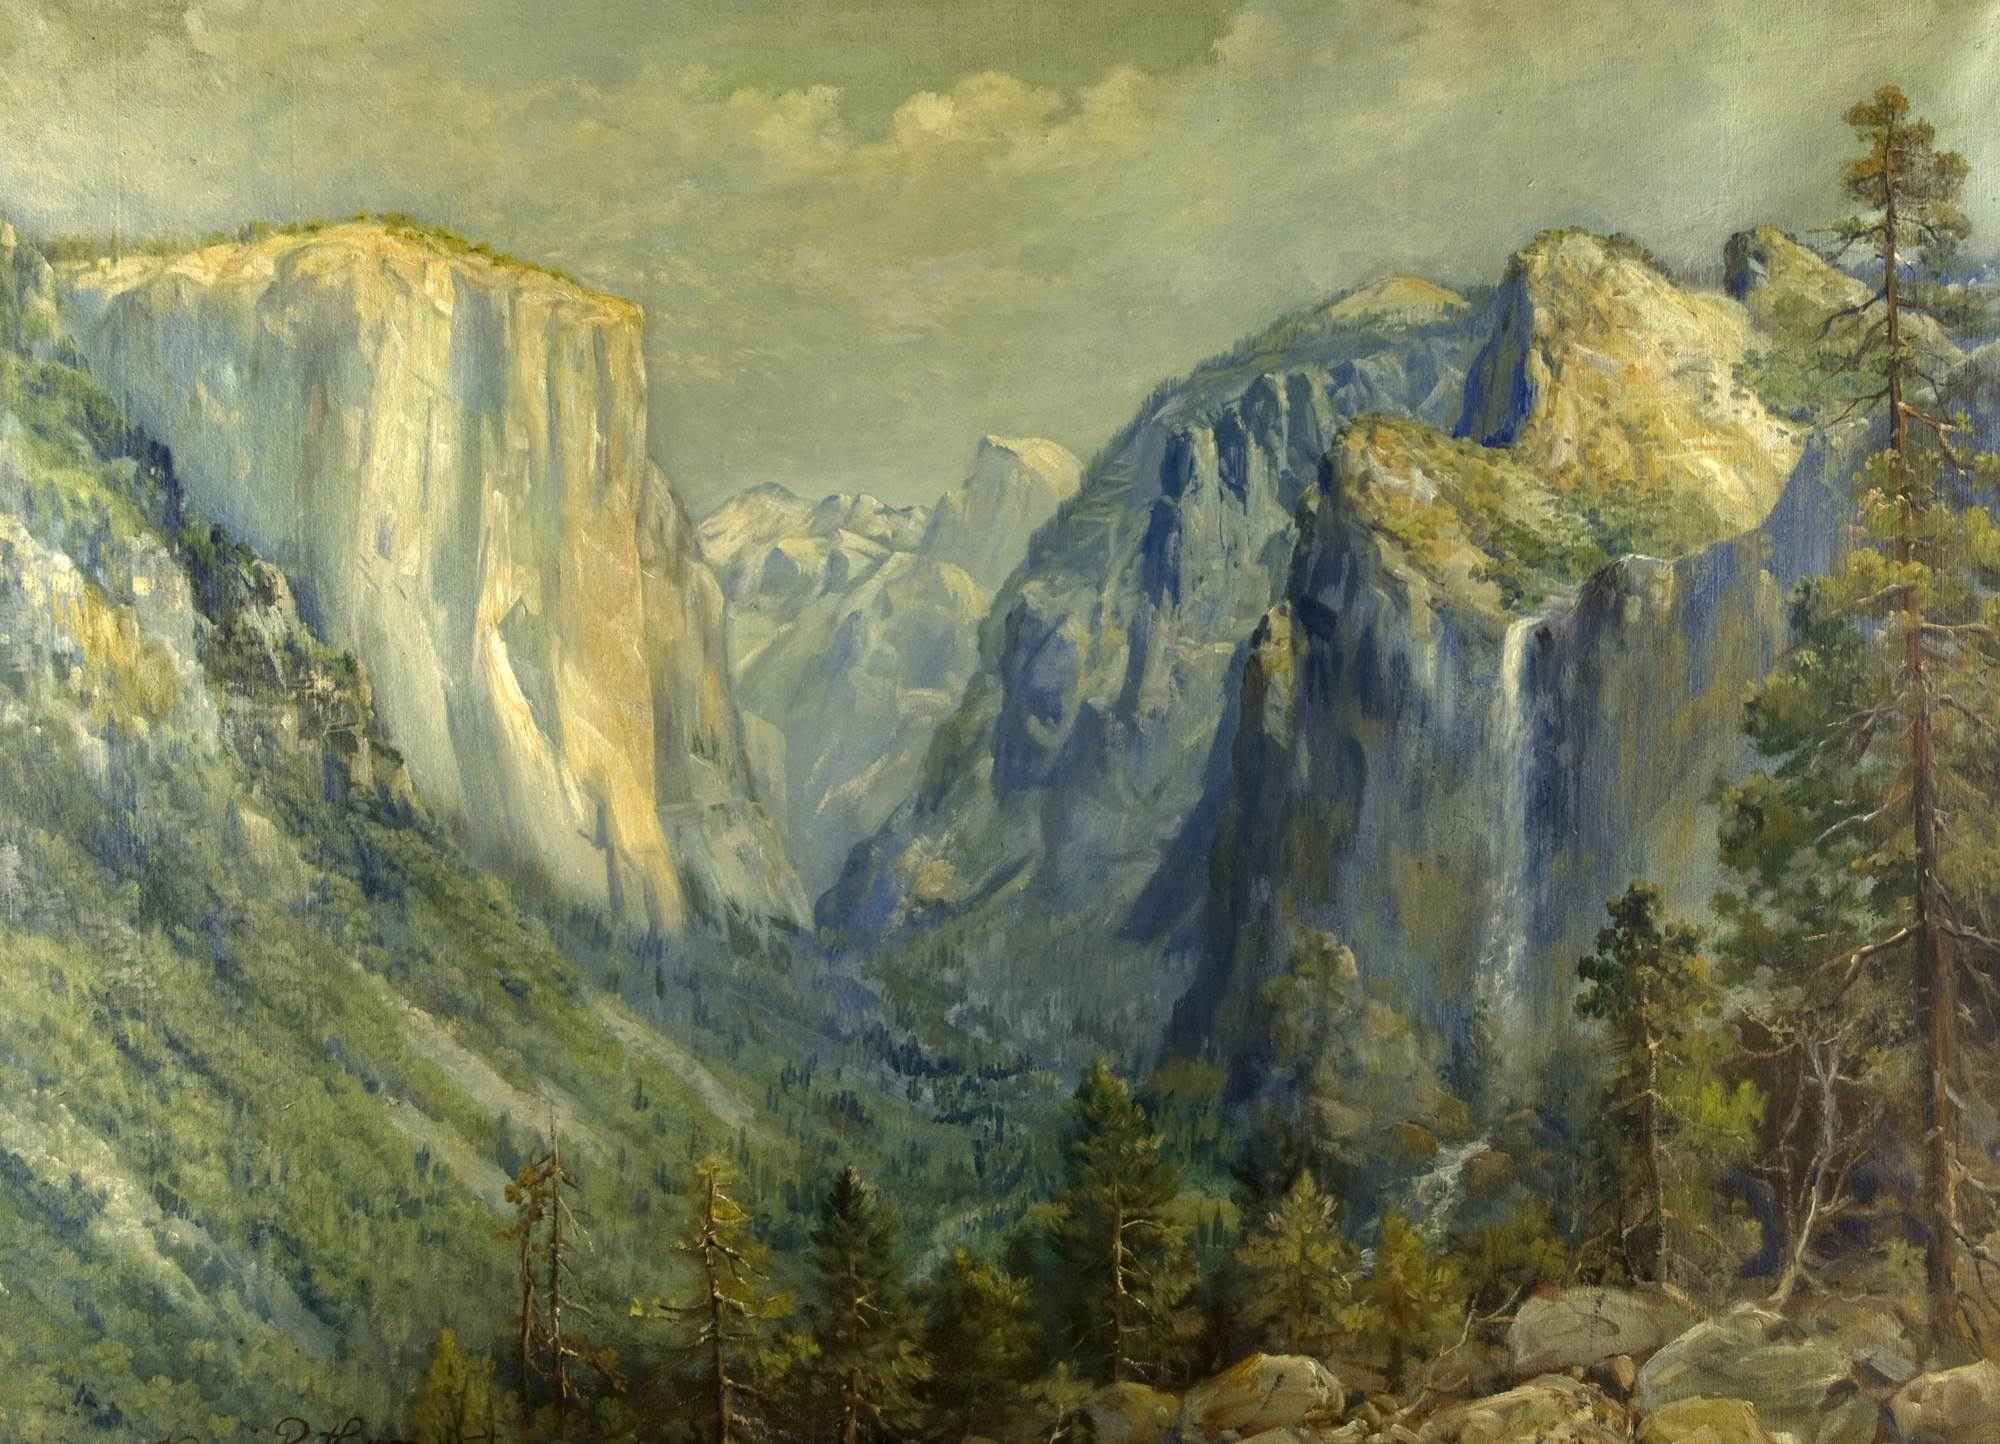 Painting Yosemite Valley from Wawona Tunnel